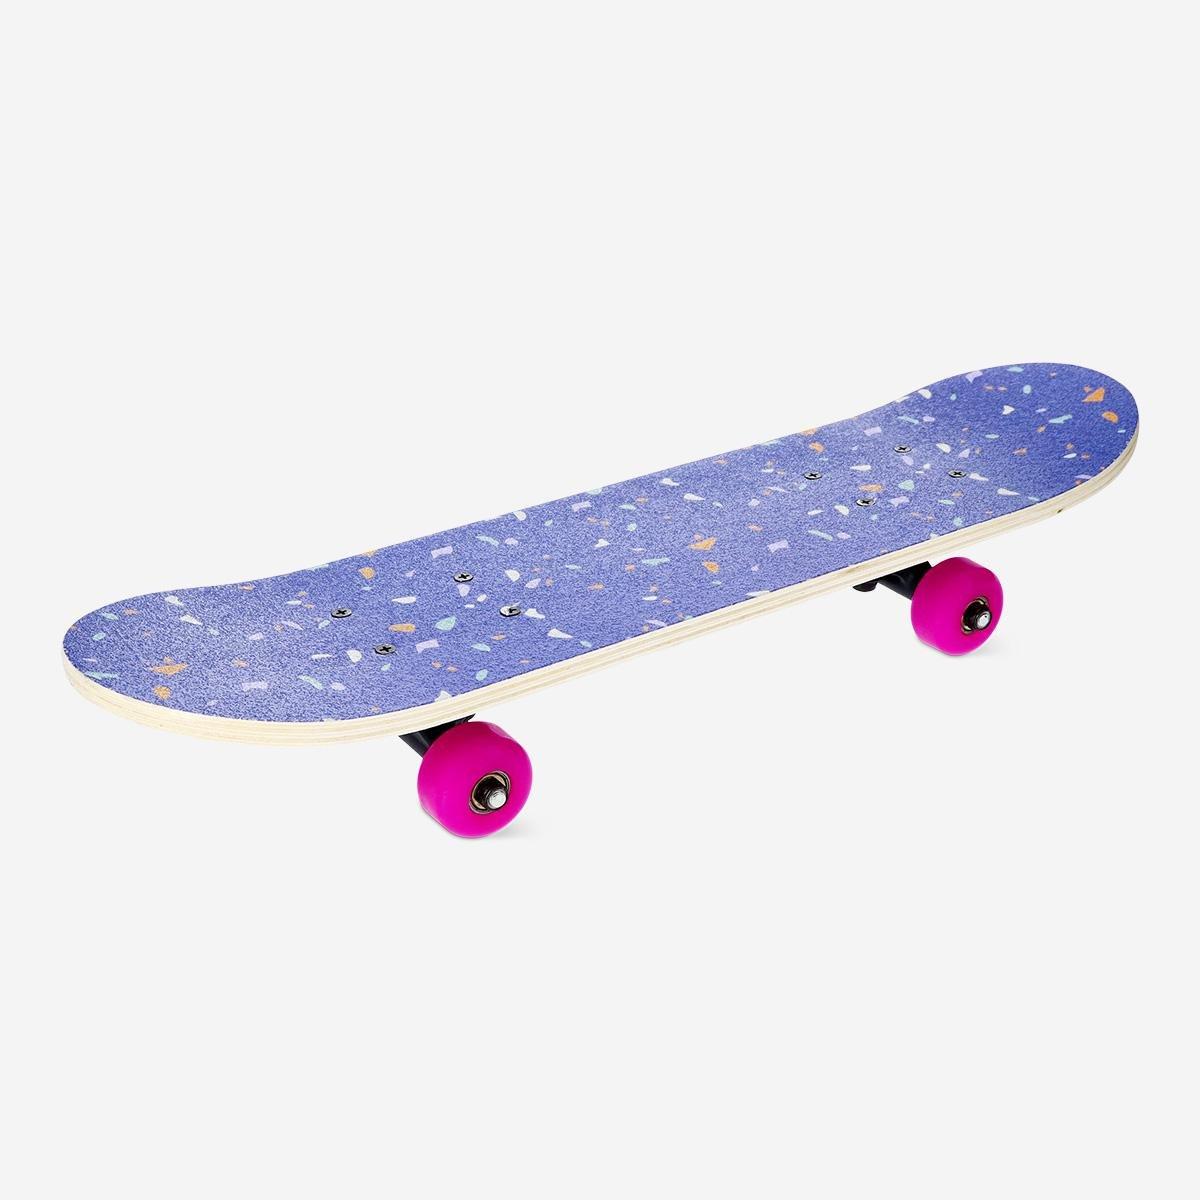 Blue patterned skateboard